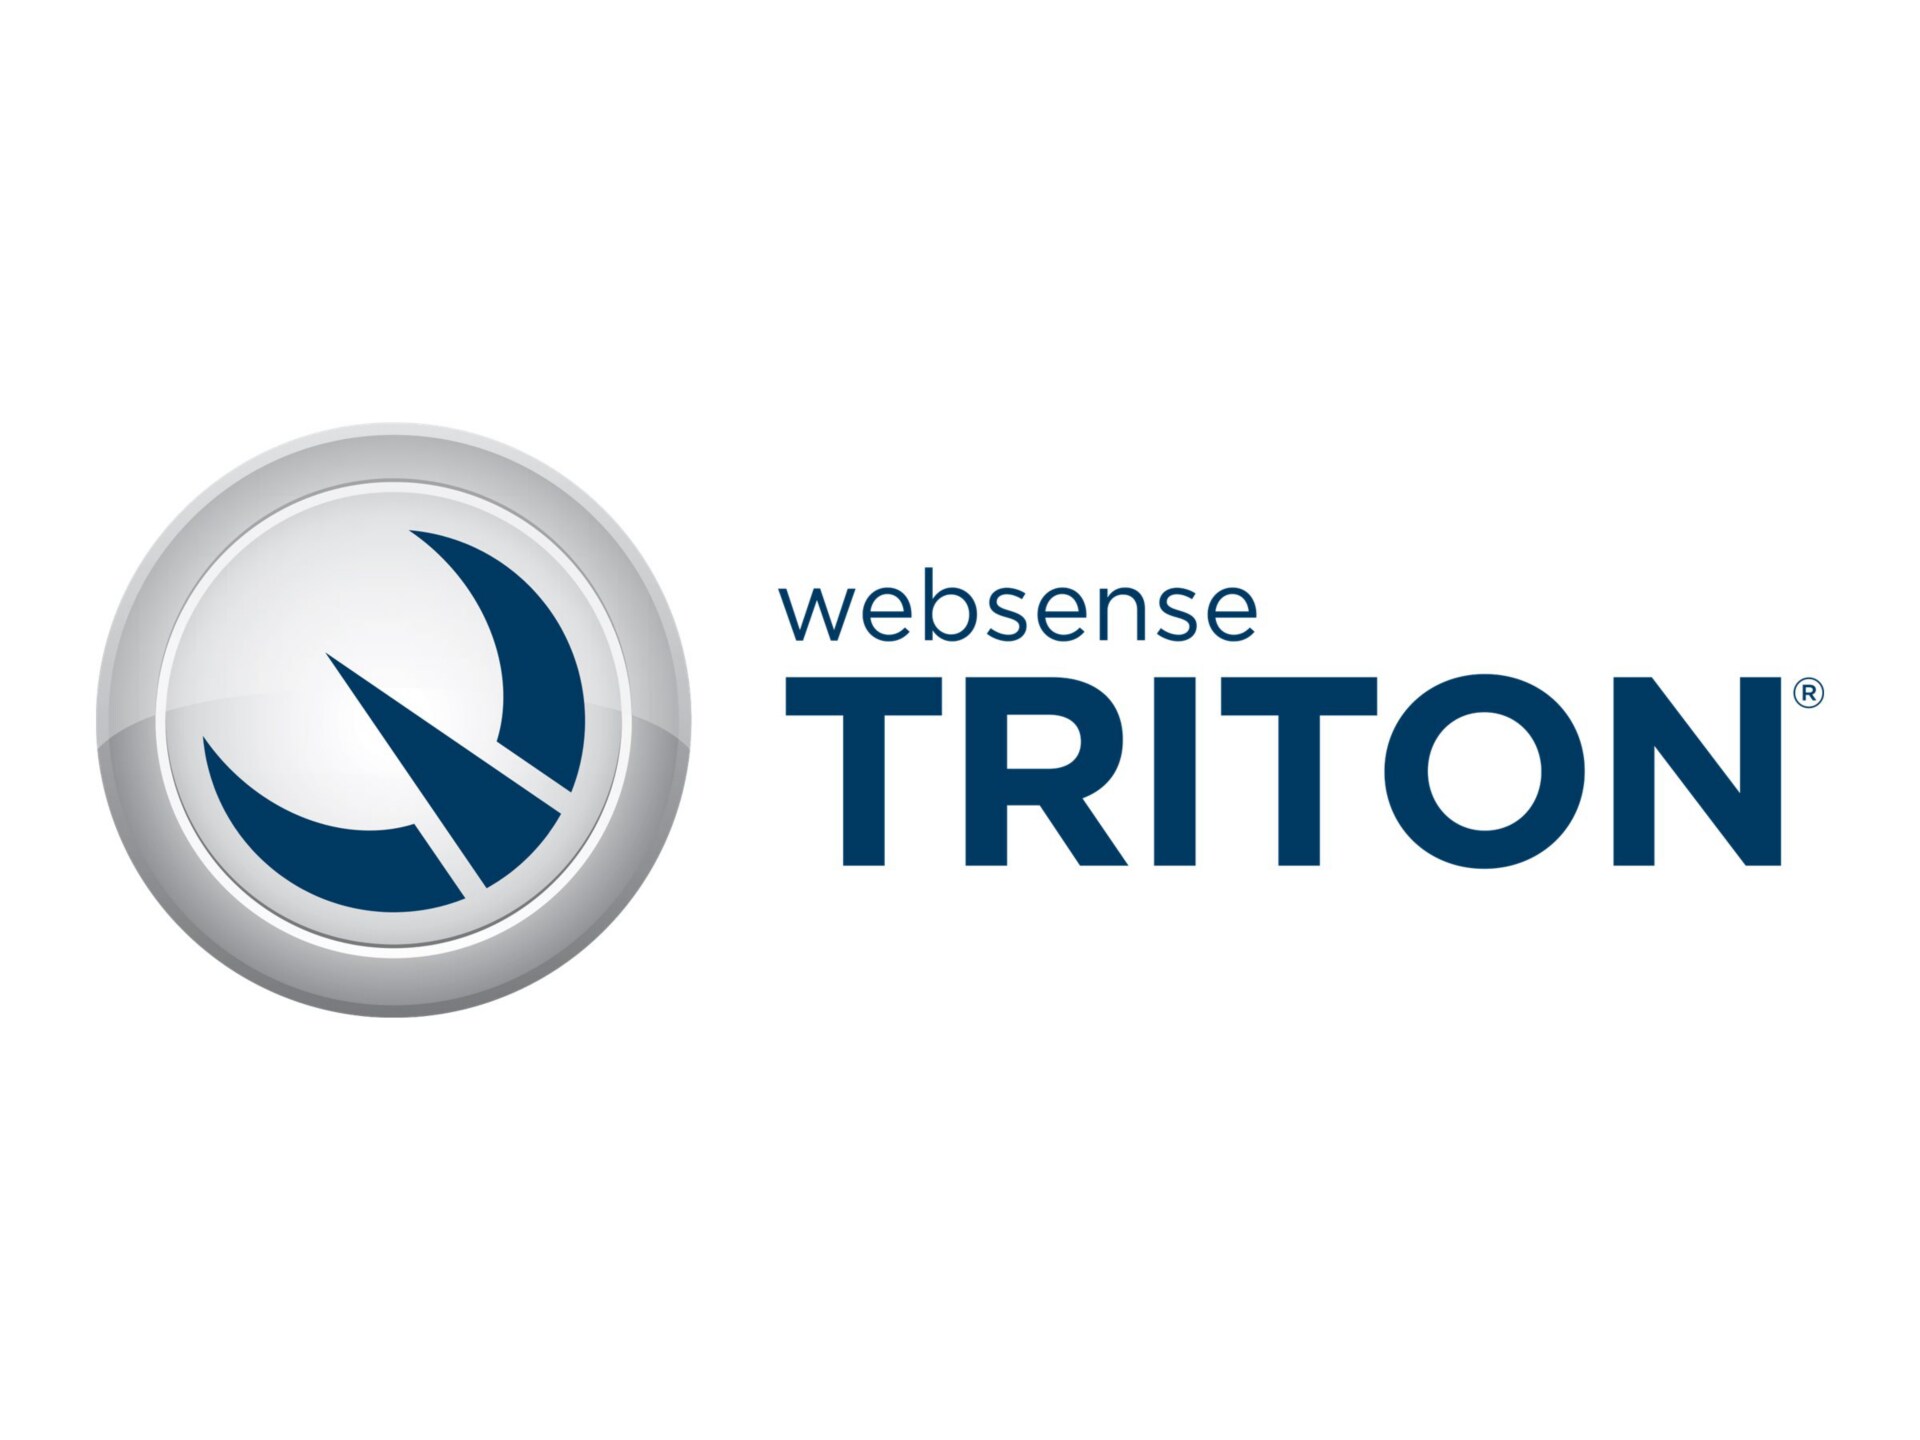 TRITON Enterprise - subscription license renewal (1 year) - 250-299 seats